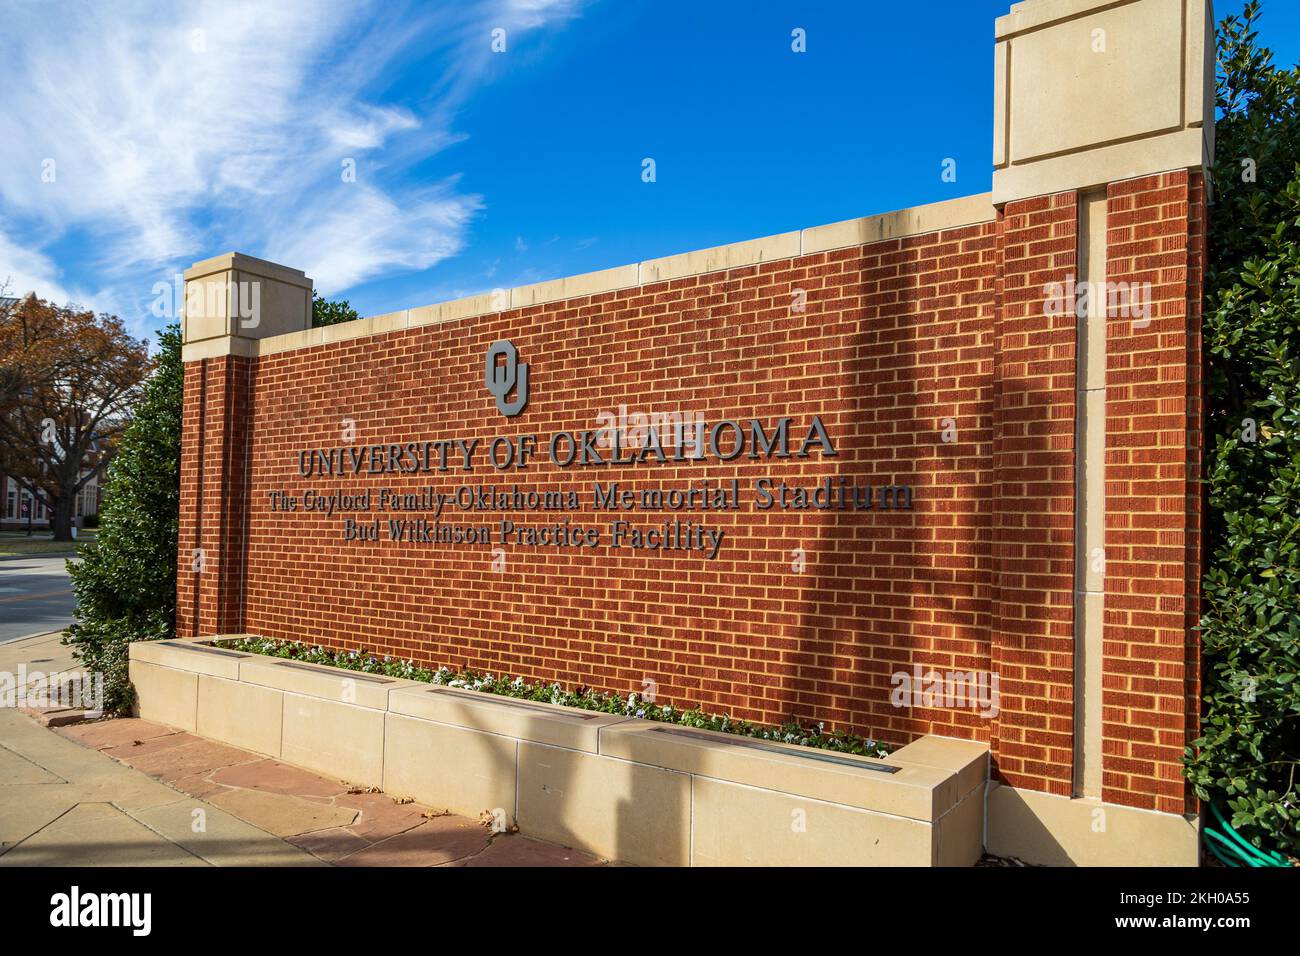 Norman, OK - November 2022: The Gaylord Family Oklahoma Memorial Stadium on the campus of the University of Oklahoma Stock Photo